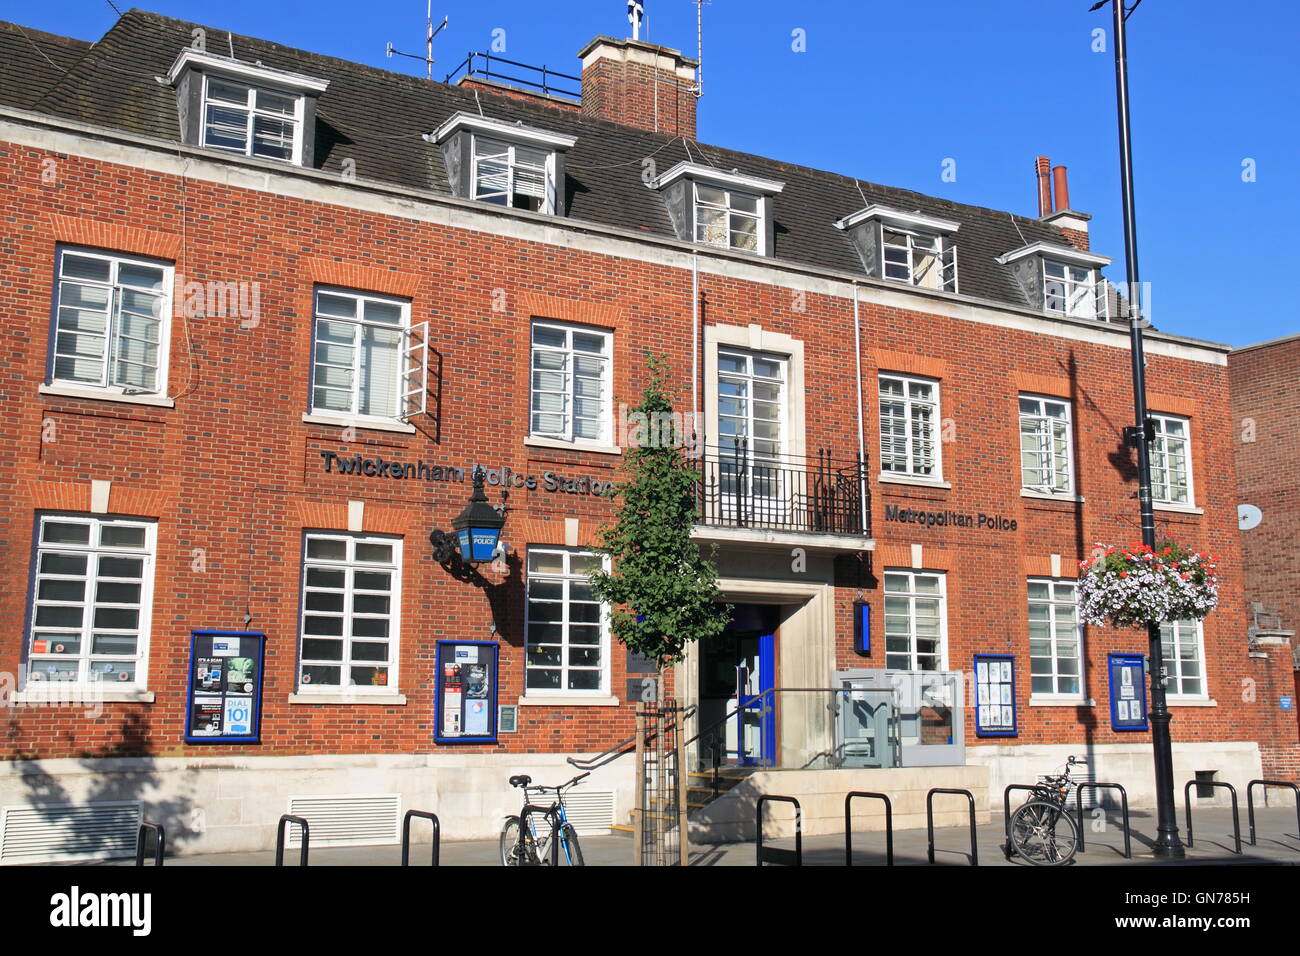 Twickenham Police Station, London Road, Greater London, England, Great Britain, United Kingdom UK, Europe Stock Photo